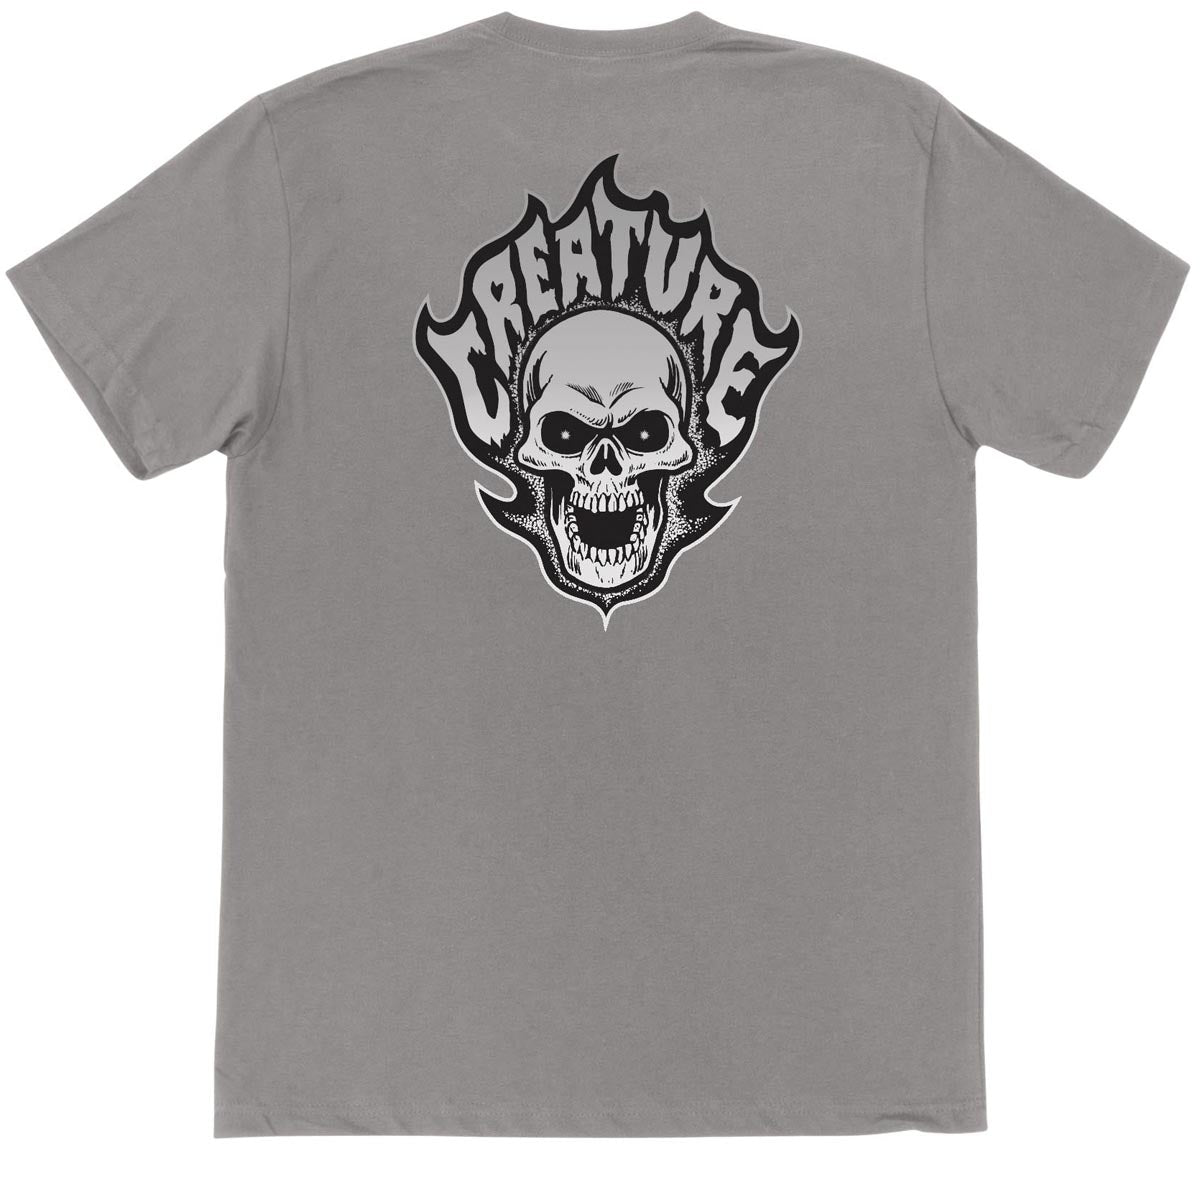 Creature Bonehead Flame T-Shirt - Medium Grey image 1